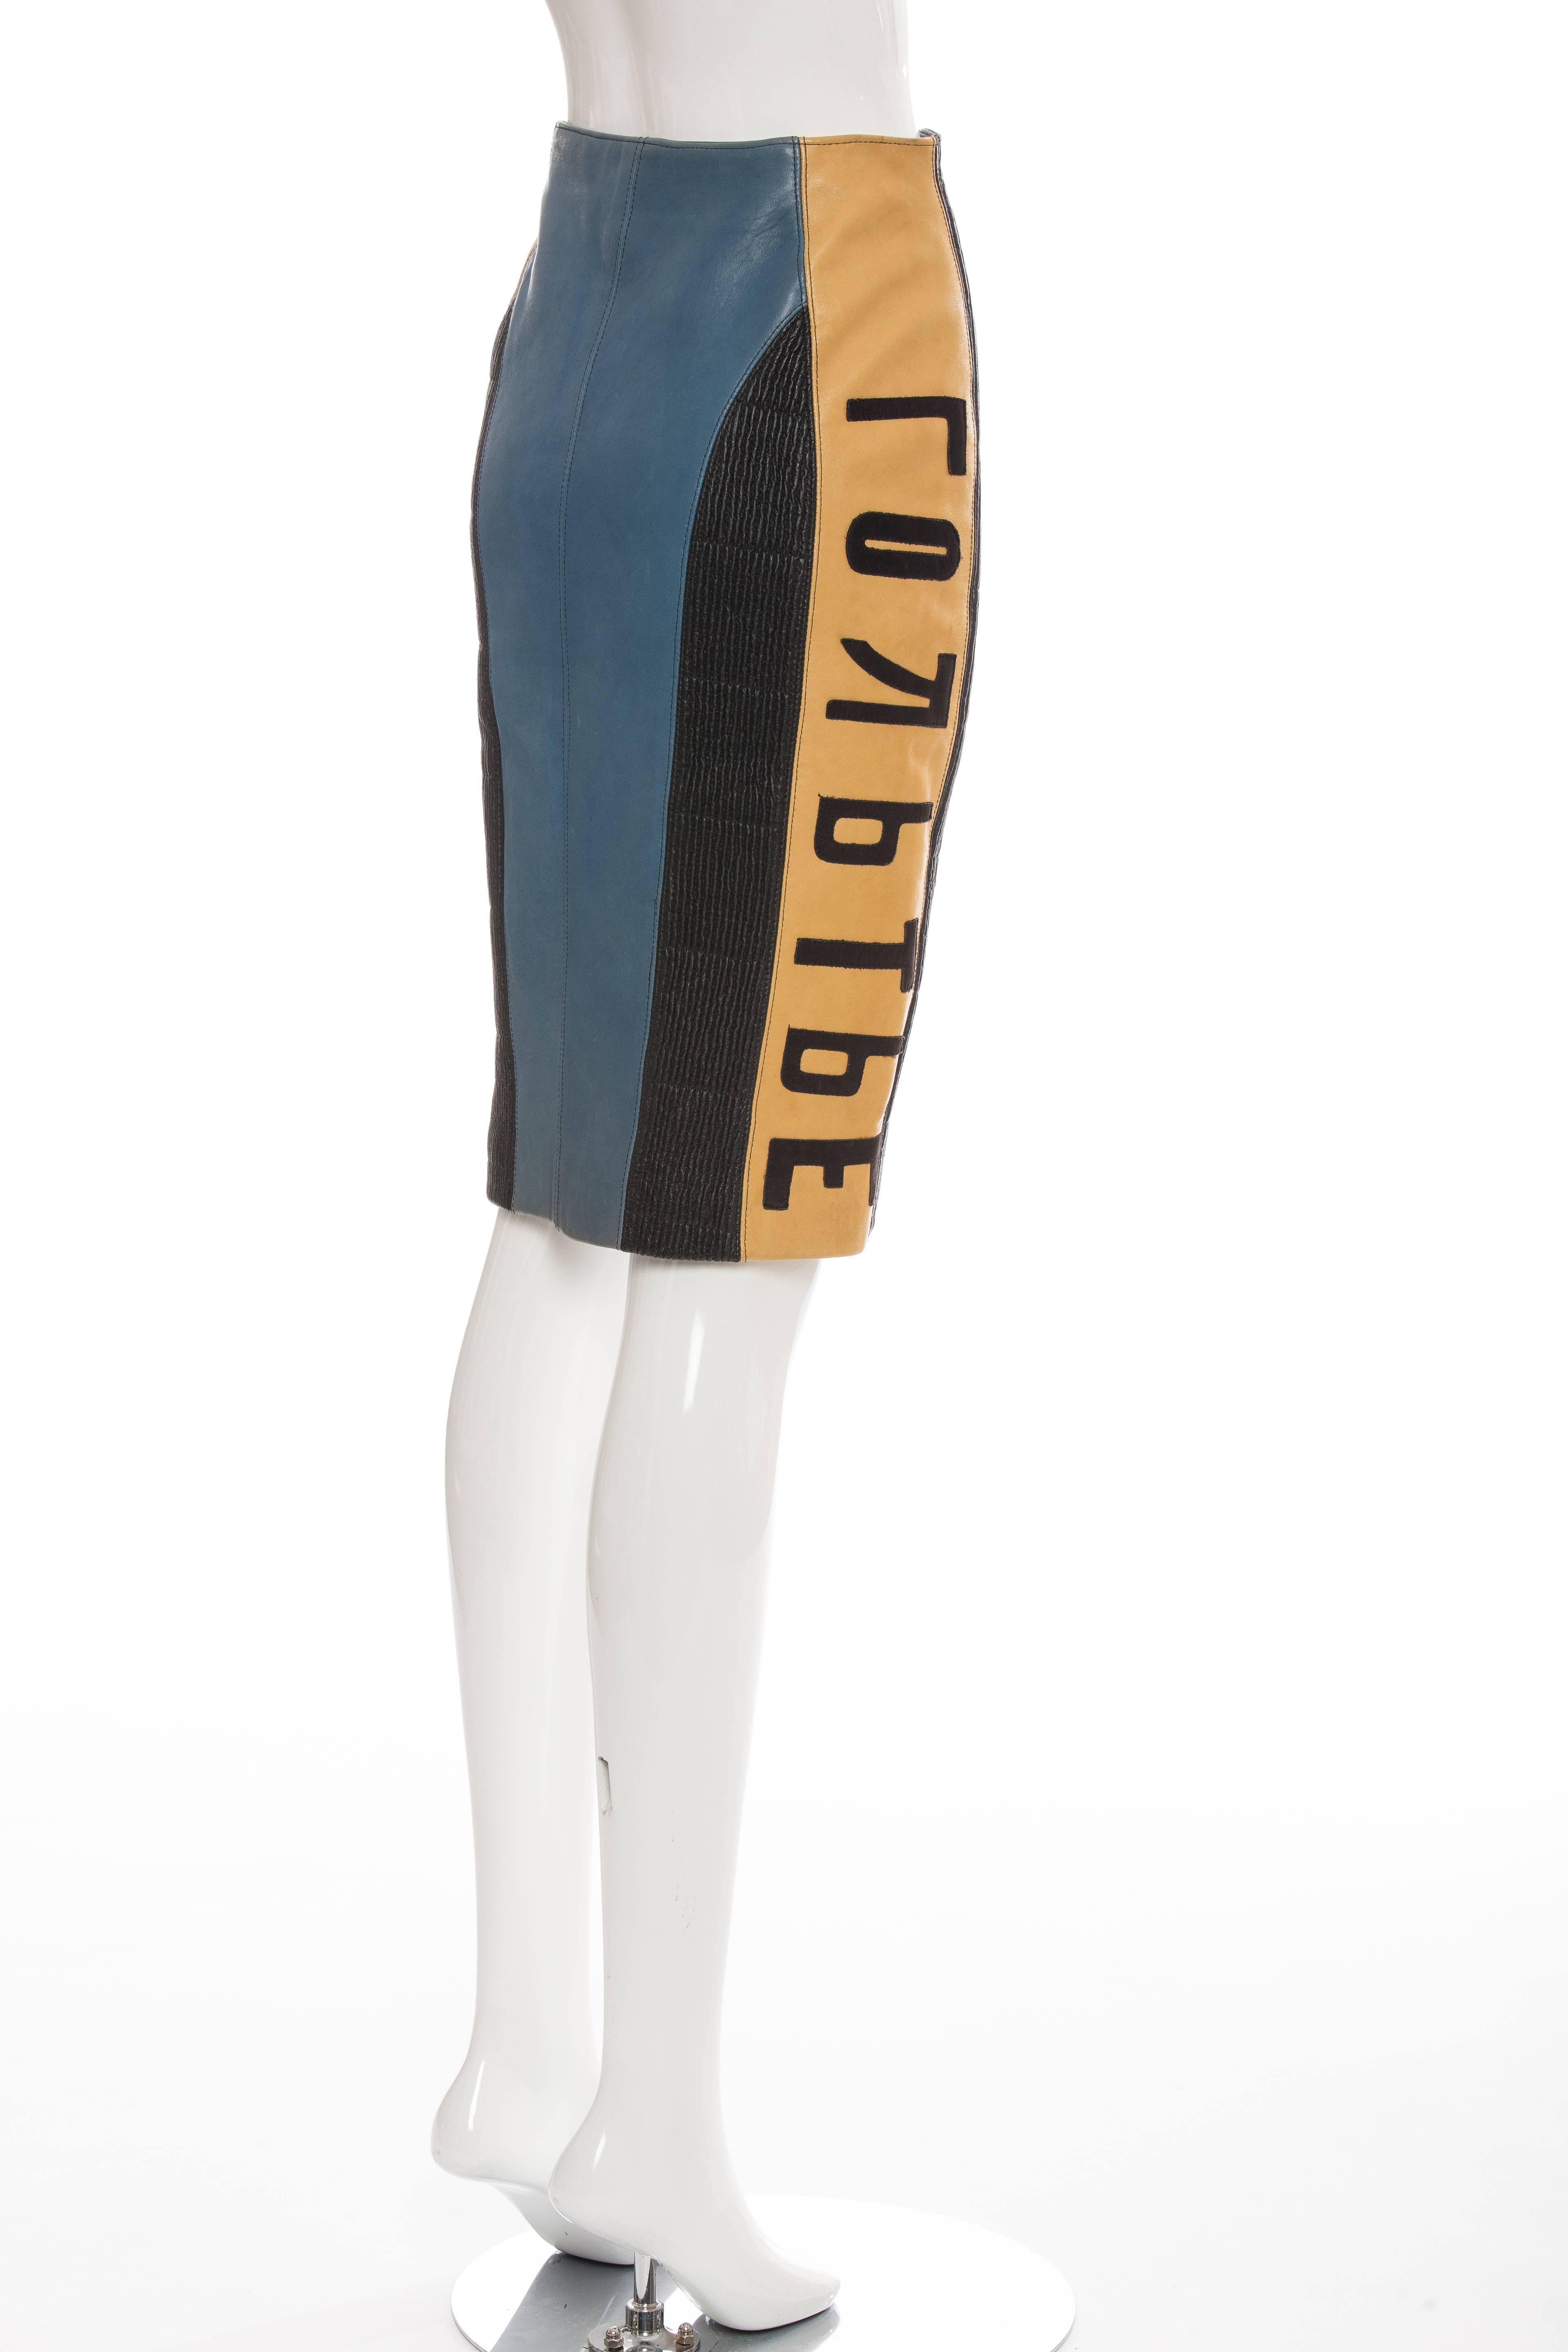 Orange Jean Paul Gaultier 'Russian Constructivist' Leather Skirt, Autumn - Winter 1986 For Sale